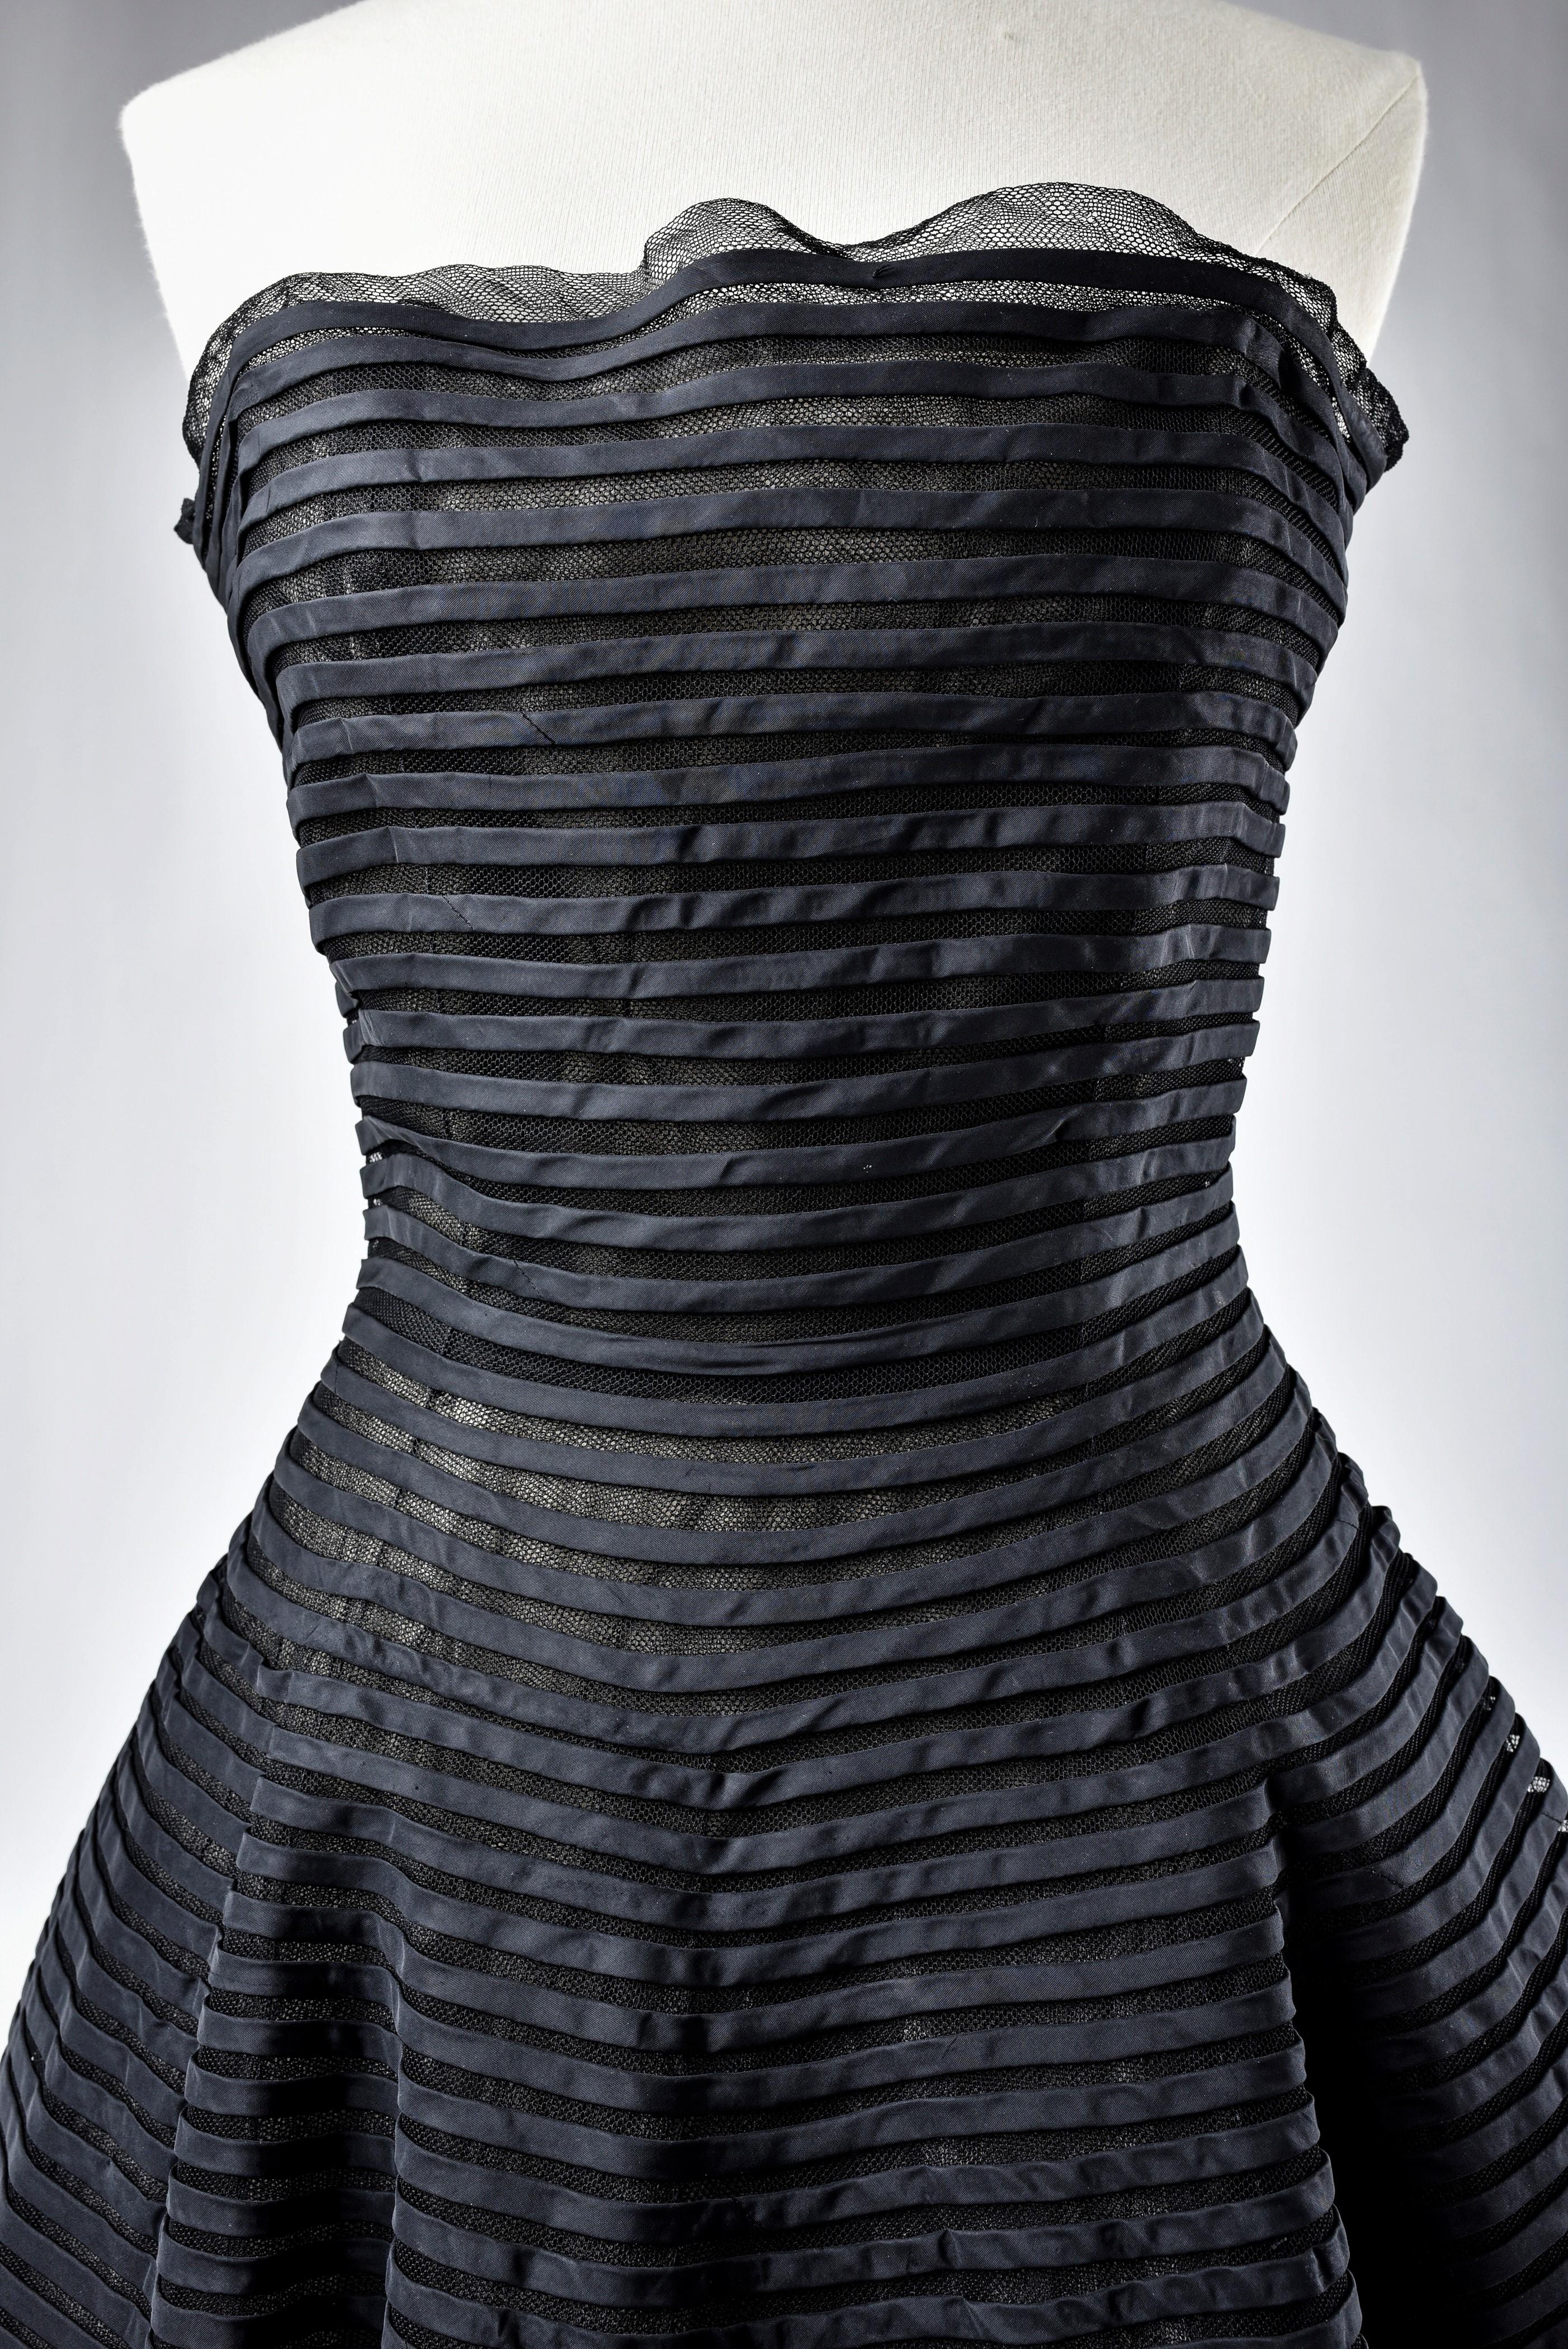 Women's Christian Dior Ball Gown in black tulle & satin appliqué N° 363404 Circa 1955